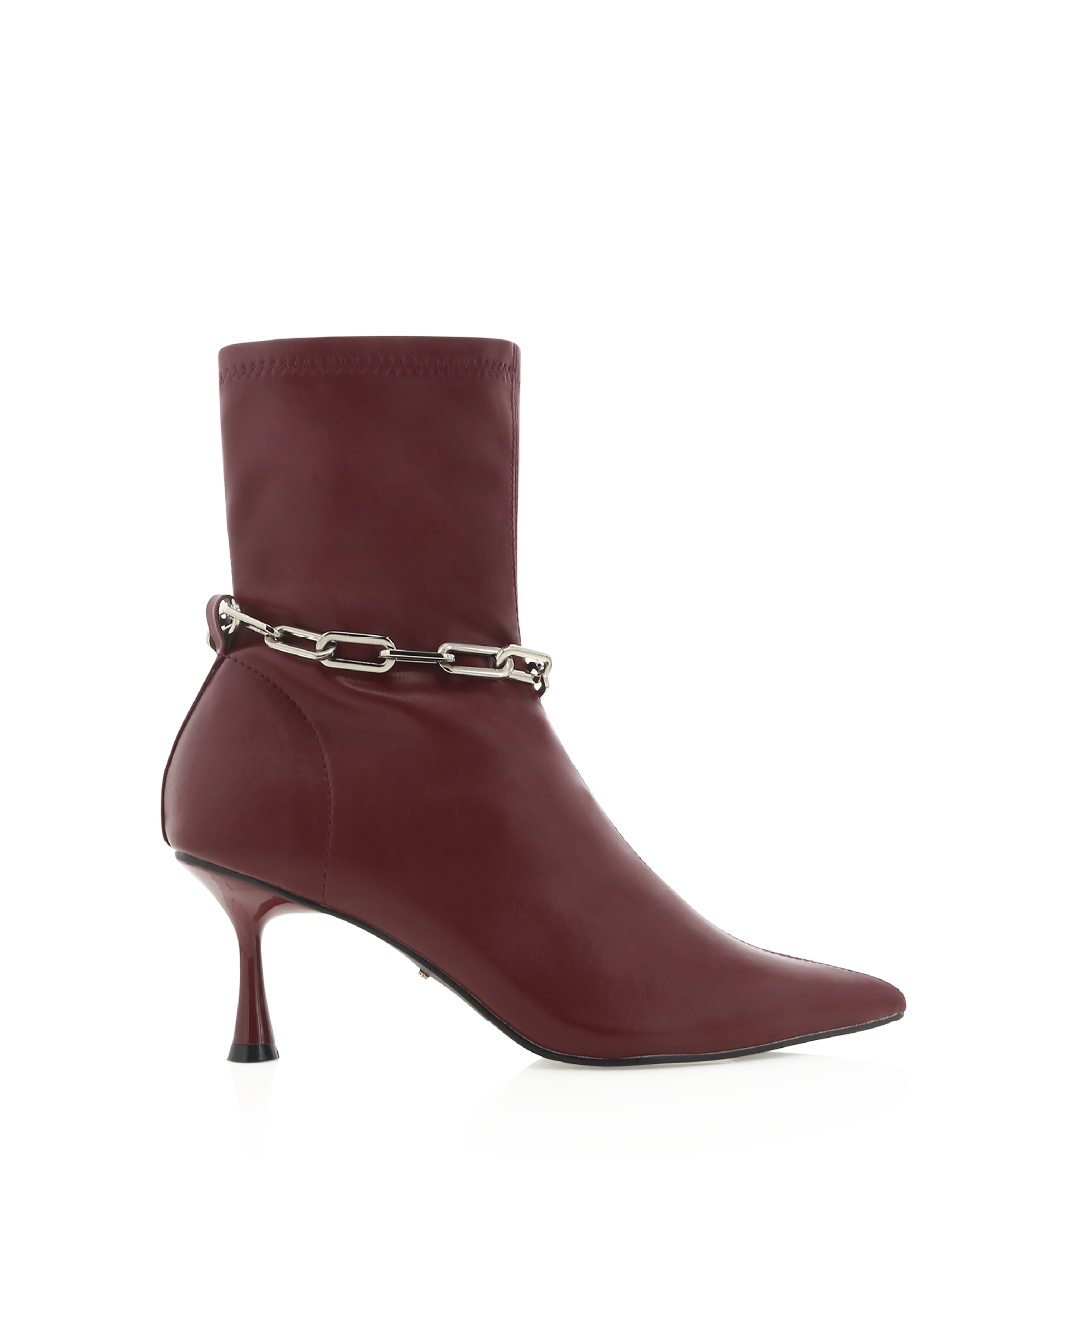 VERNA - CHERRY RED-Boots-Billini-Billini